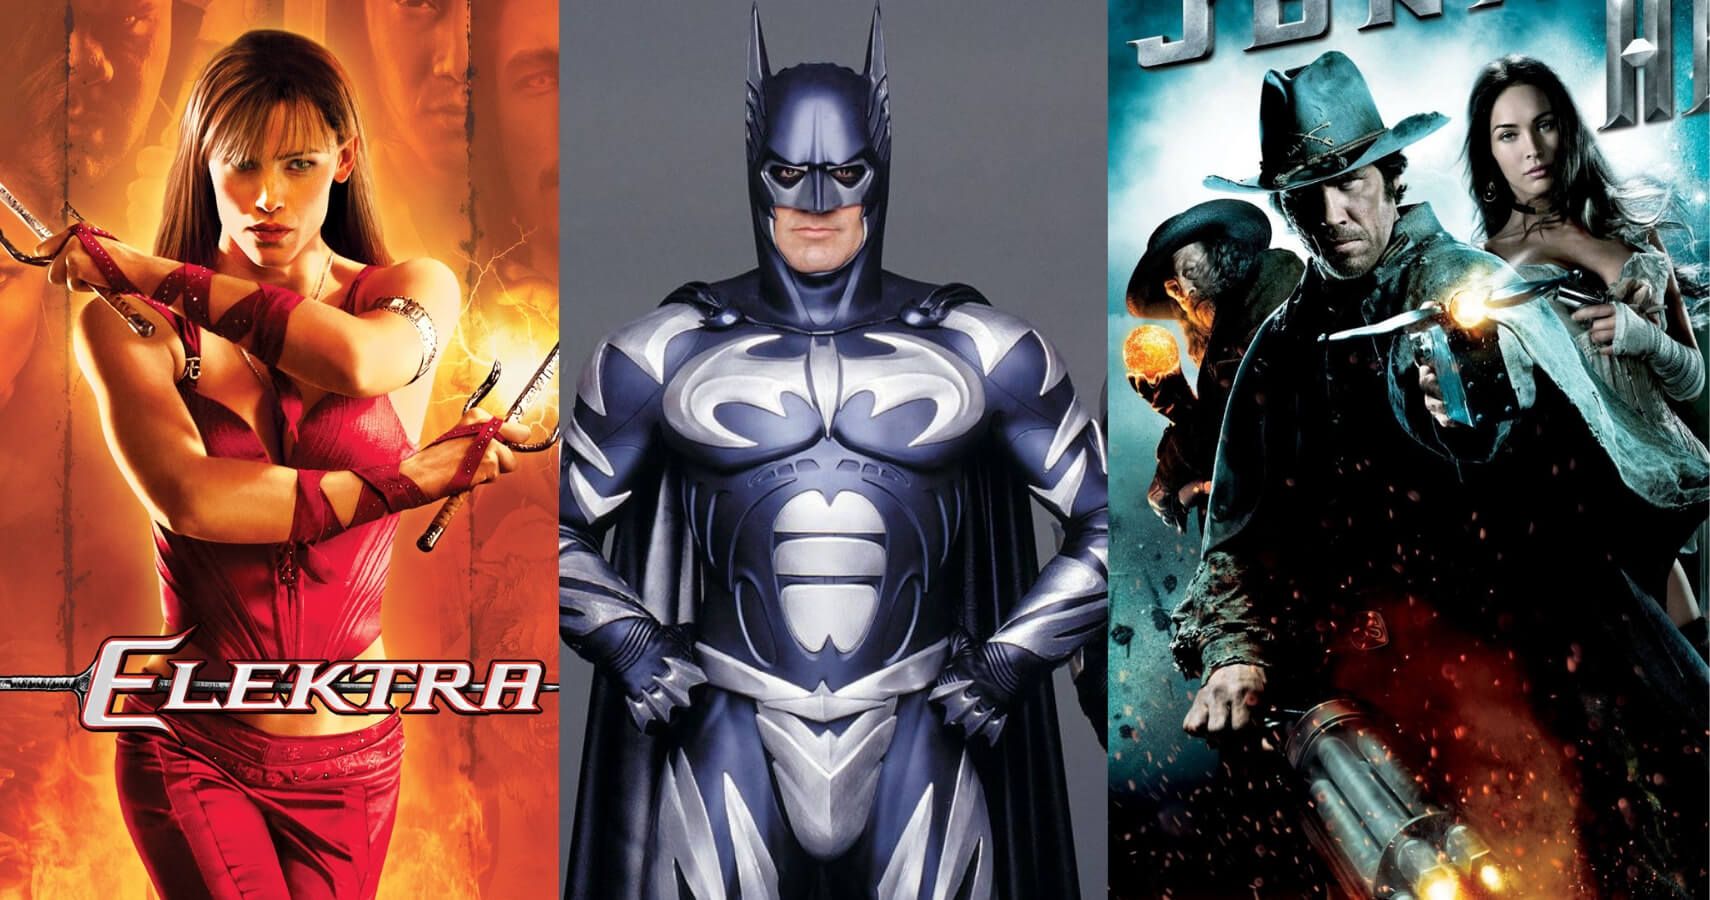 Ranking The Worst Superhero Movies According To Rotten Tomatoes